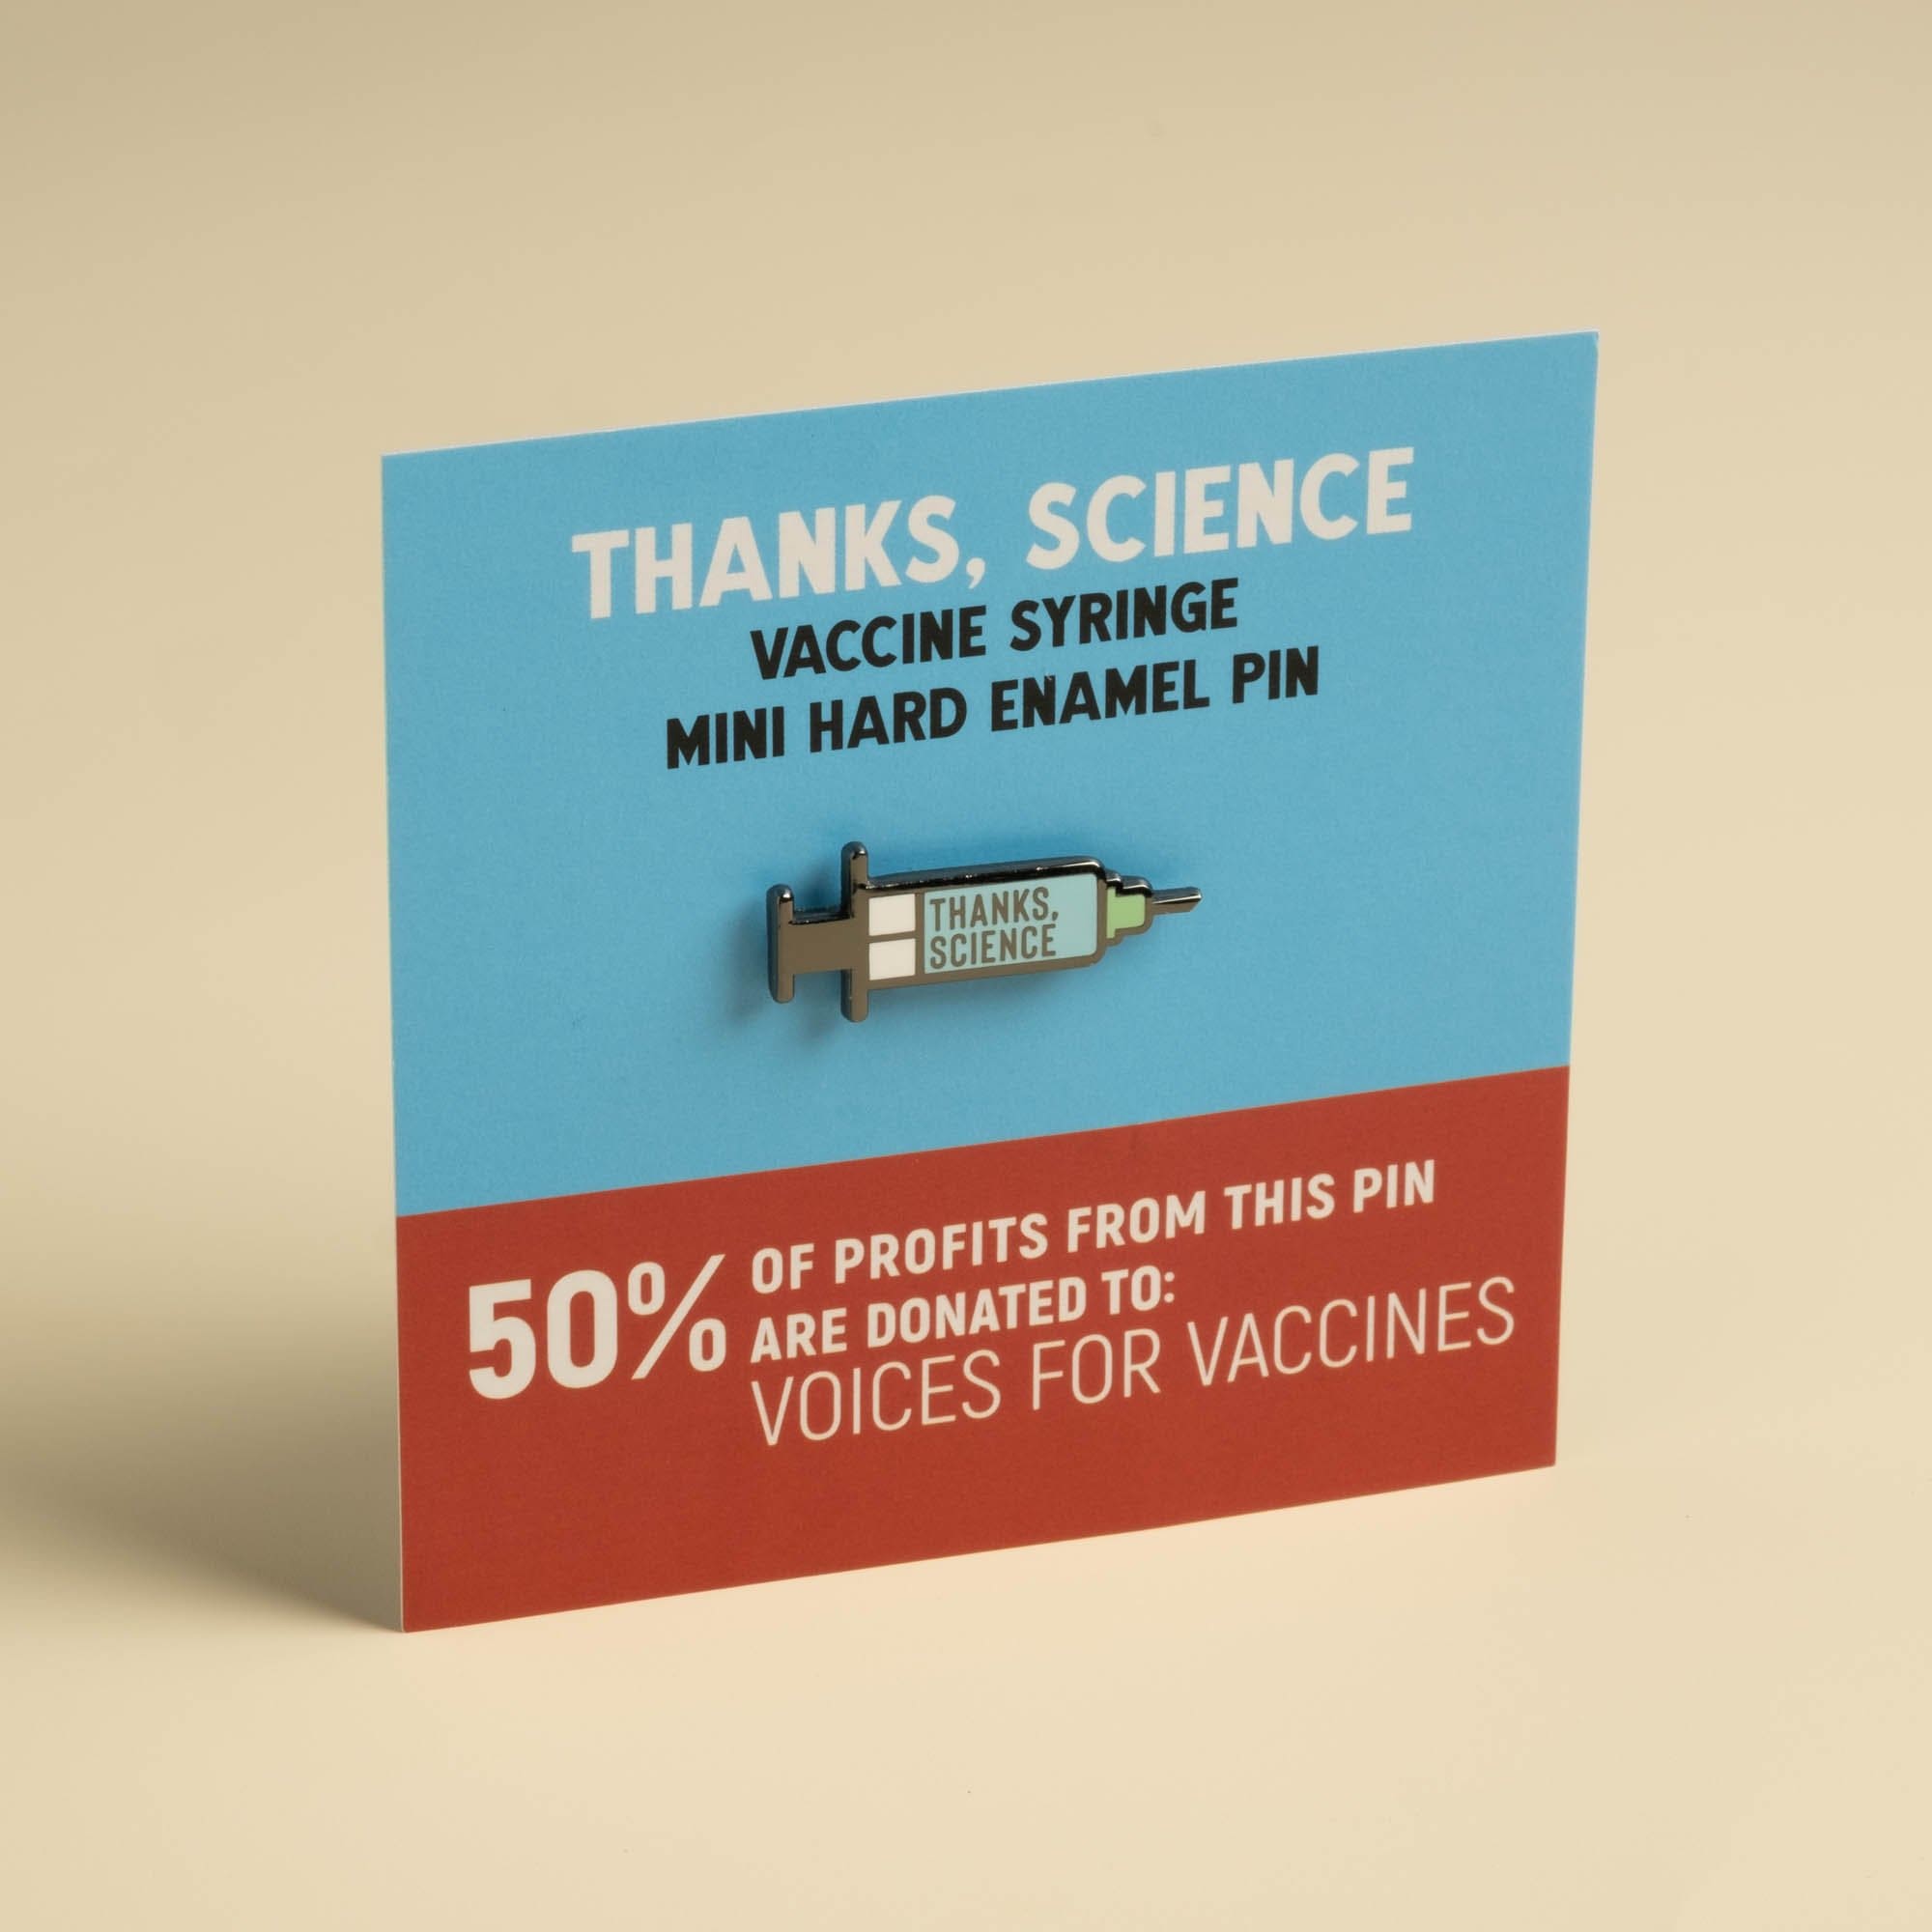 Thanks, Science - Vaccine Syringe Mini Pin